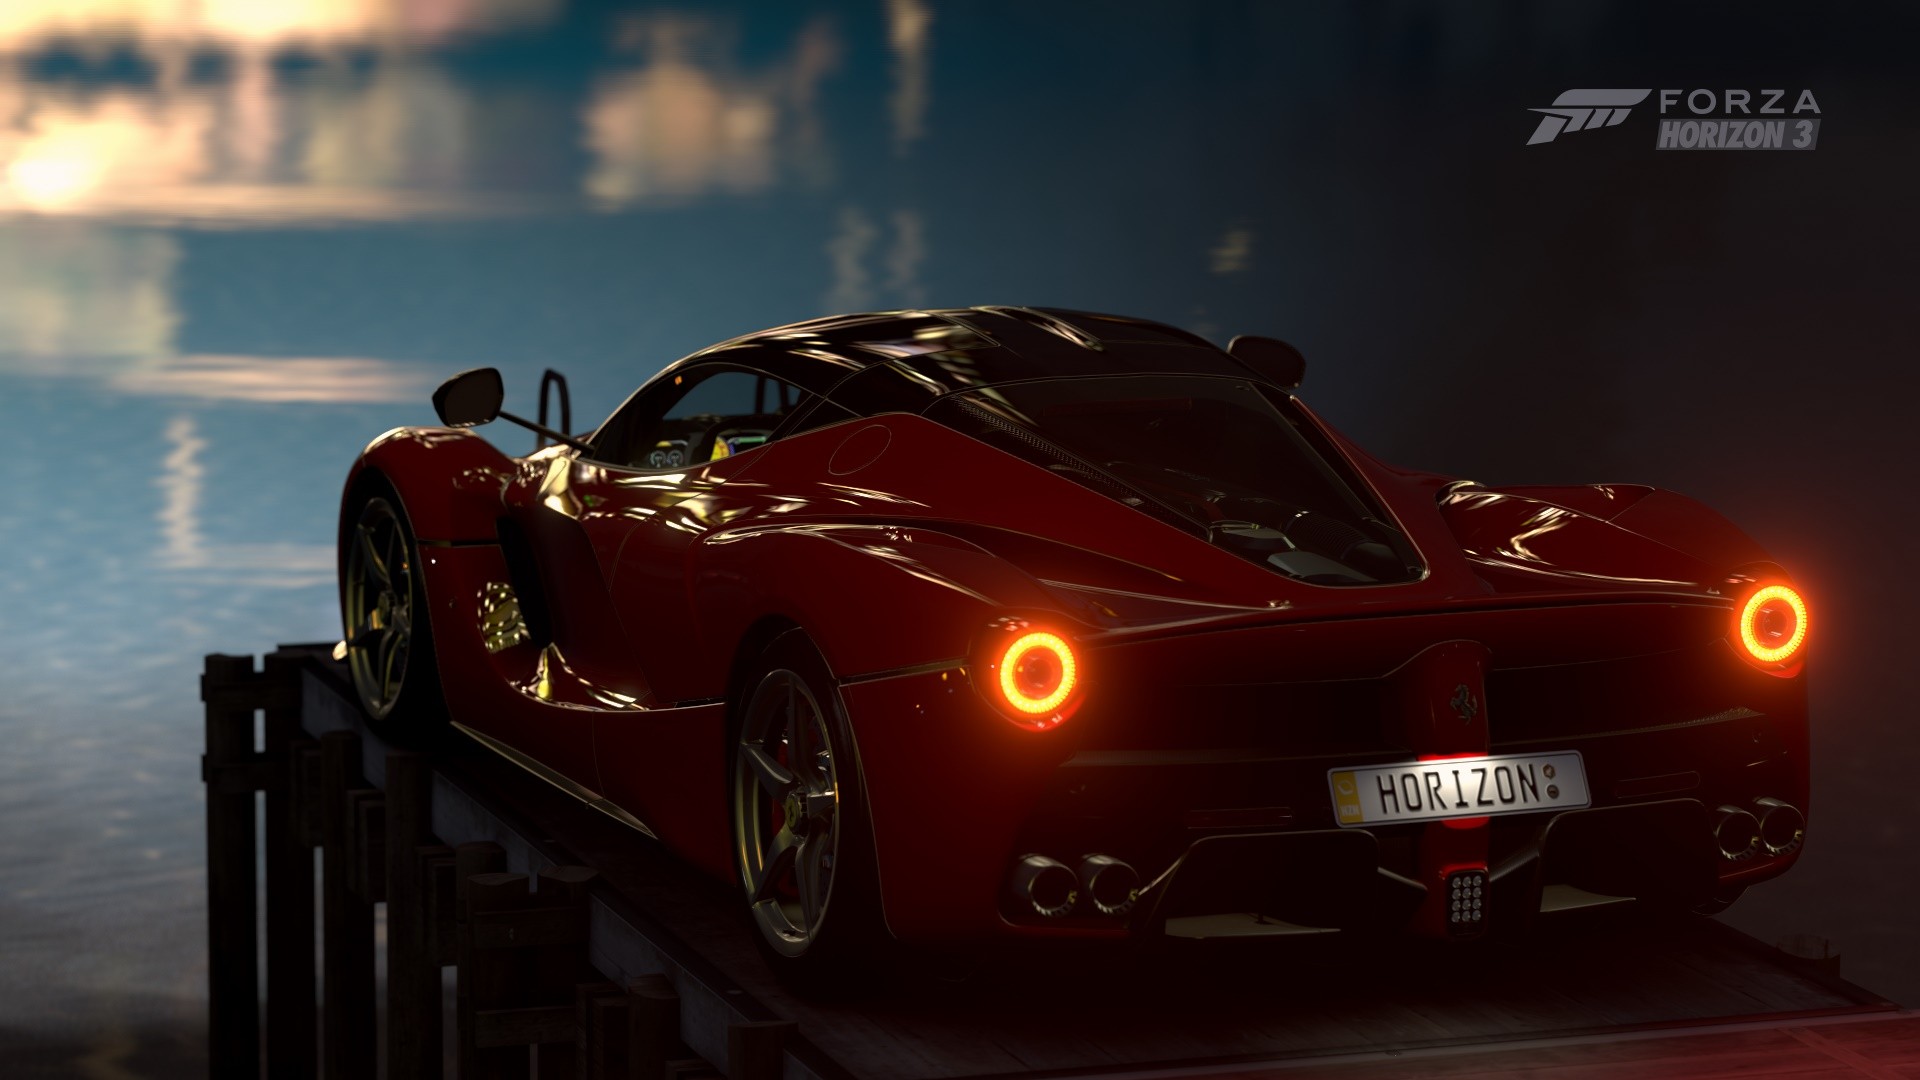 General 1920x1080 Forza Horizon 3 video games Ferrari Turn 10 Studios red cars supercars vehicle car